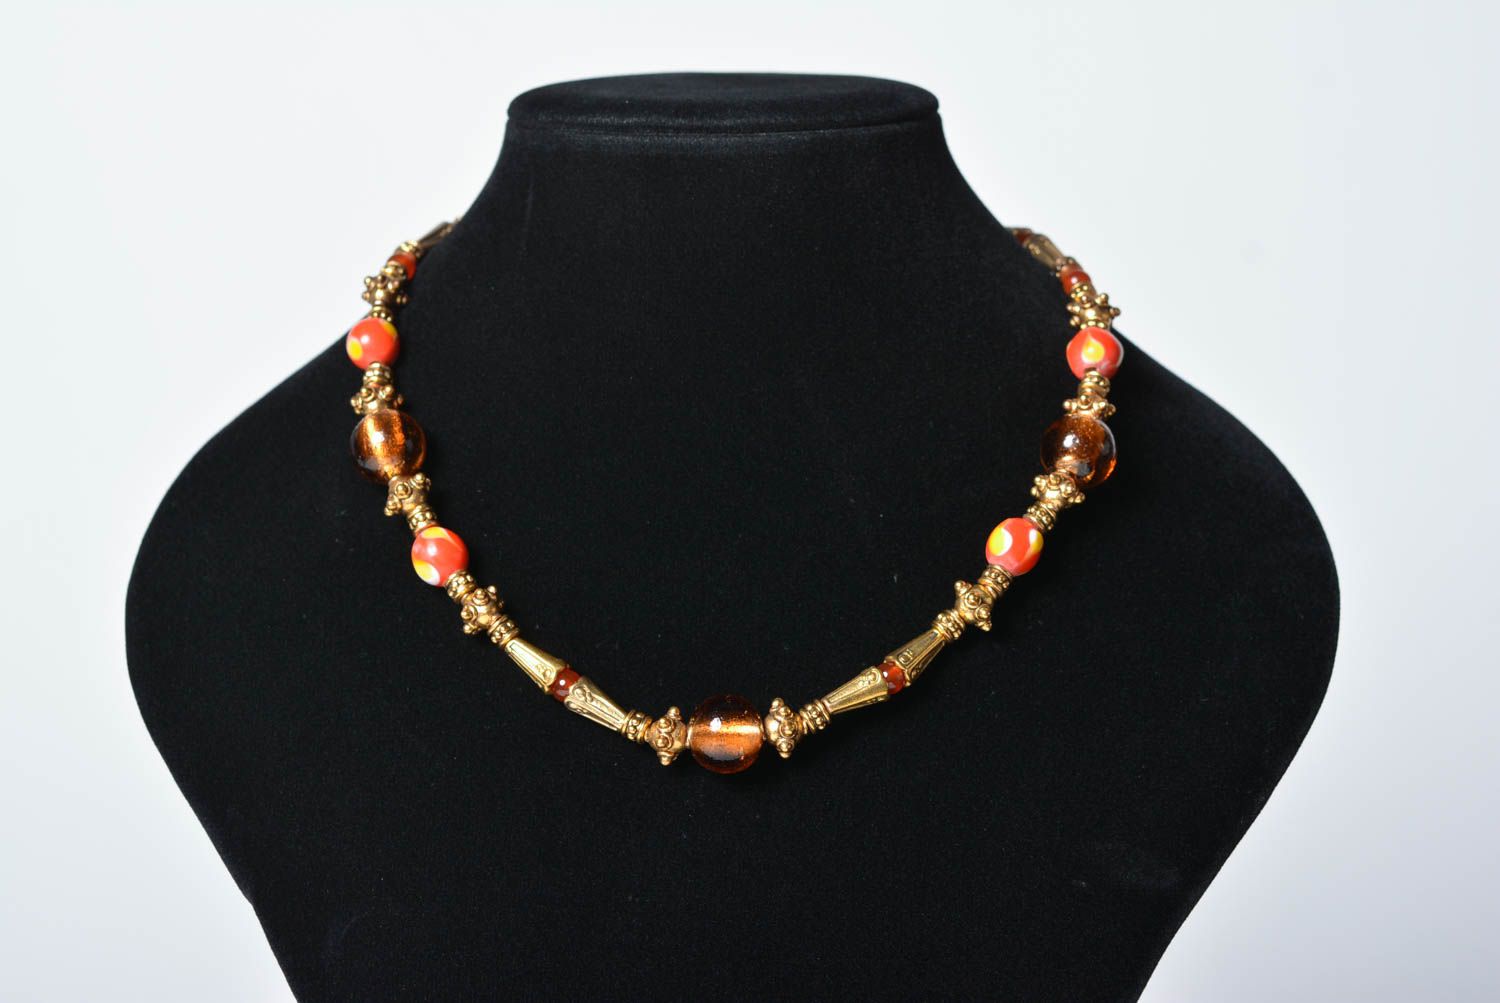 Handmade beaded necklace designer natural stones jewelry present for women photo 2